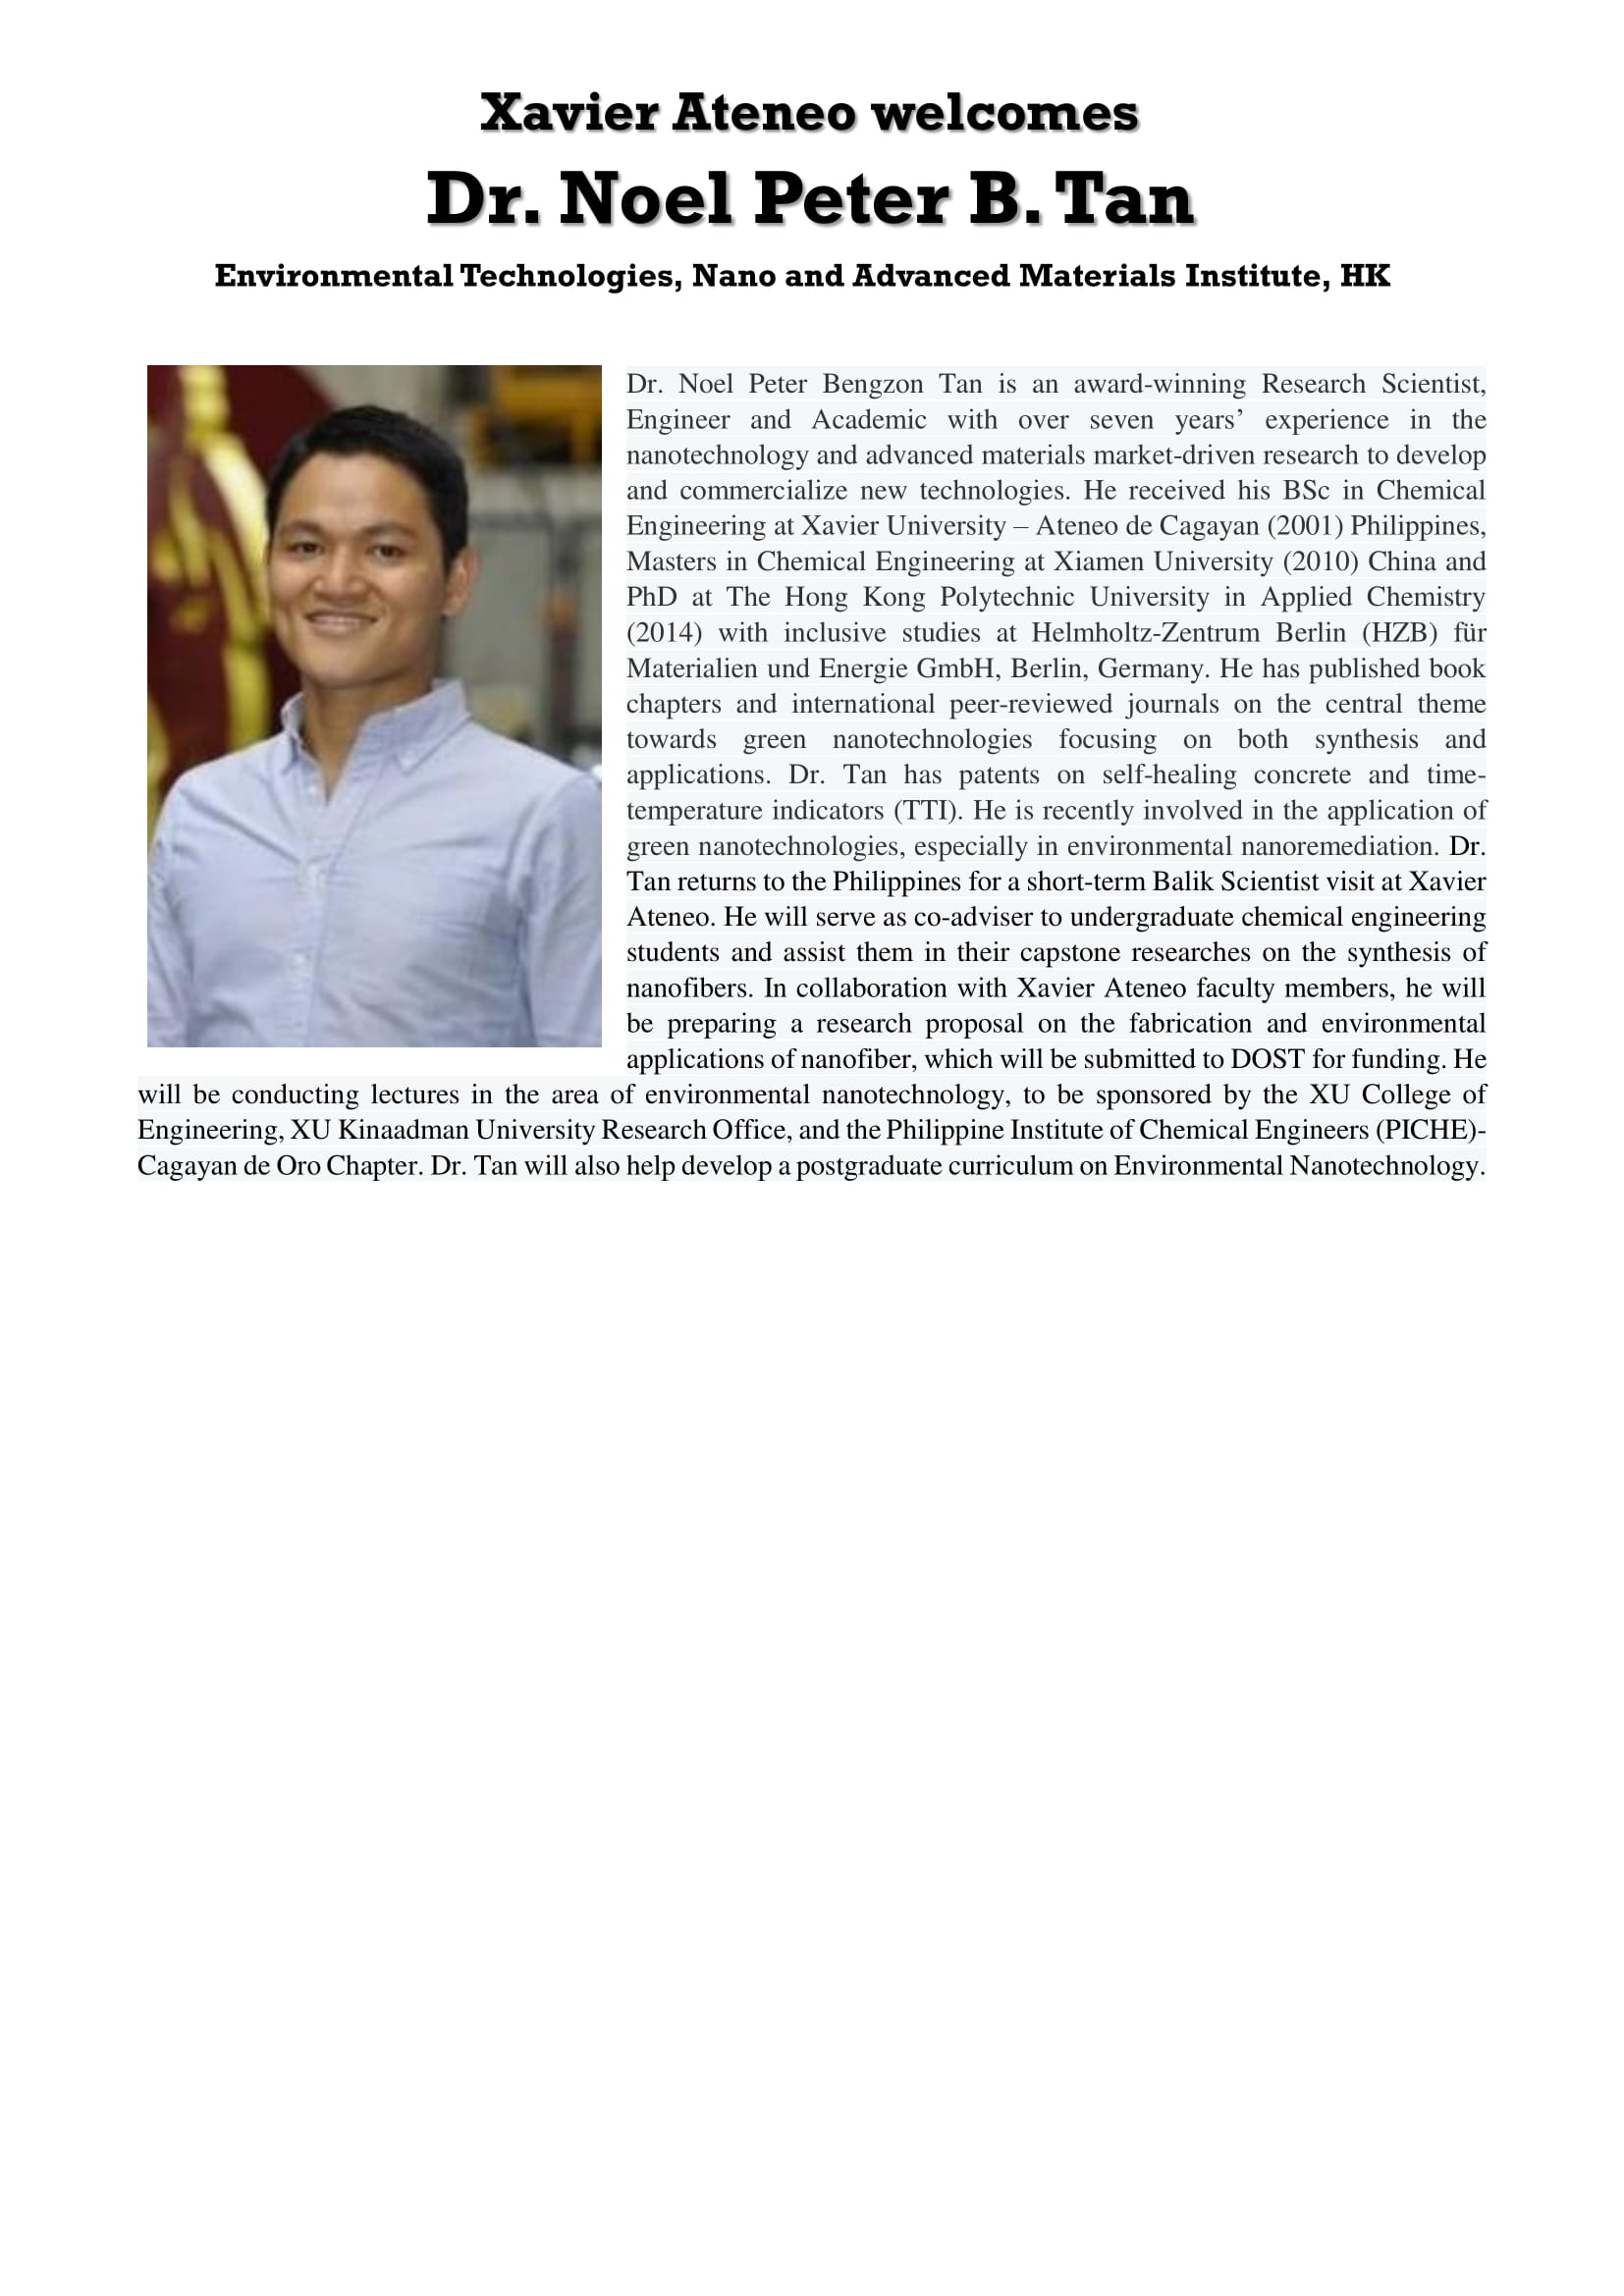 Xavier Ateneo Balik Scientist Profile 1